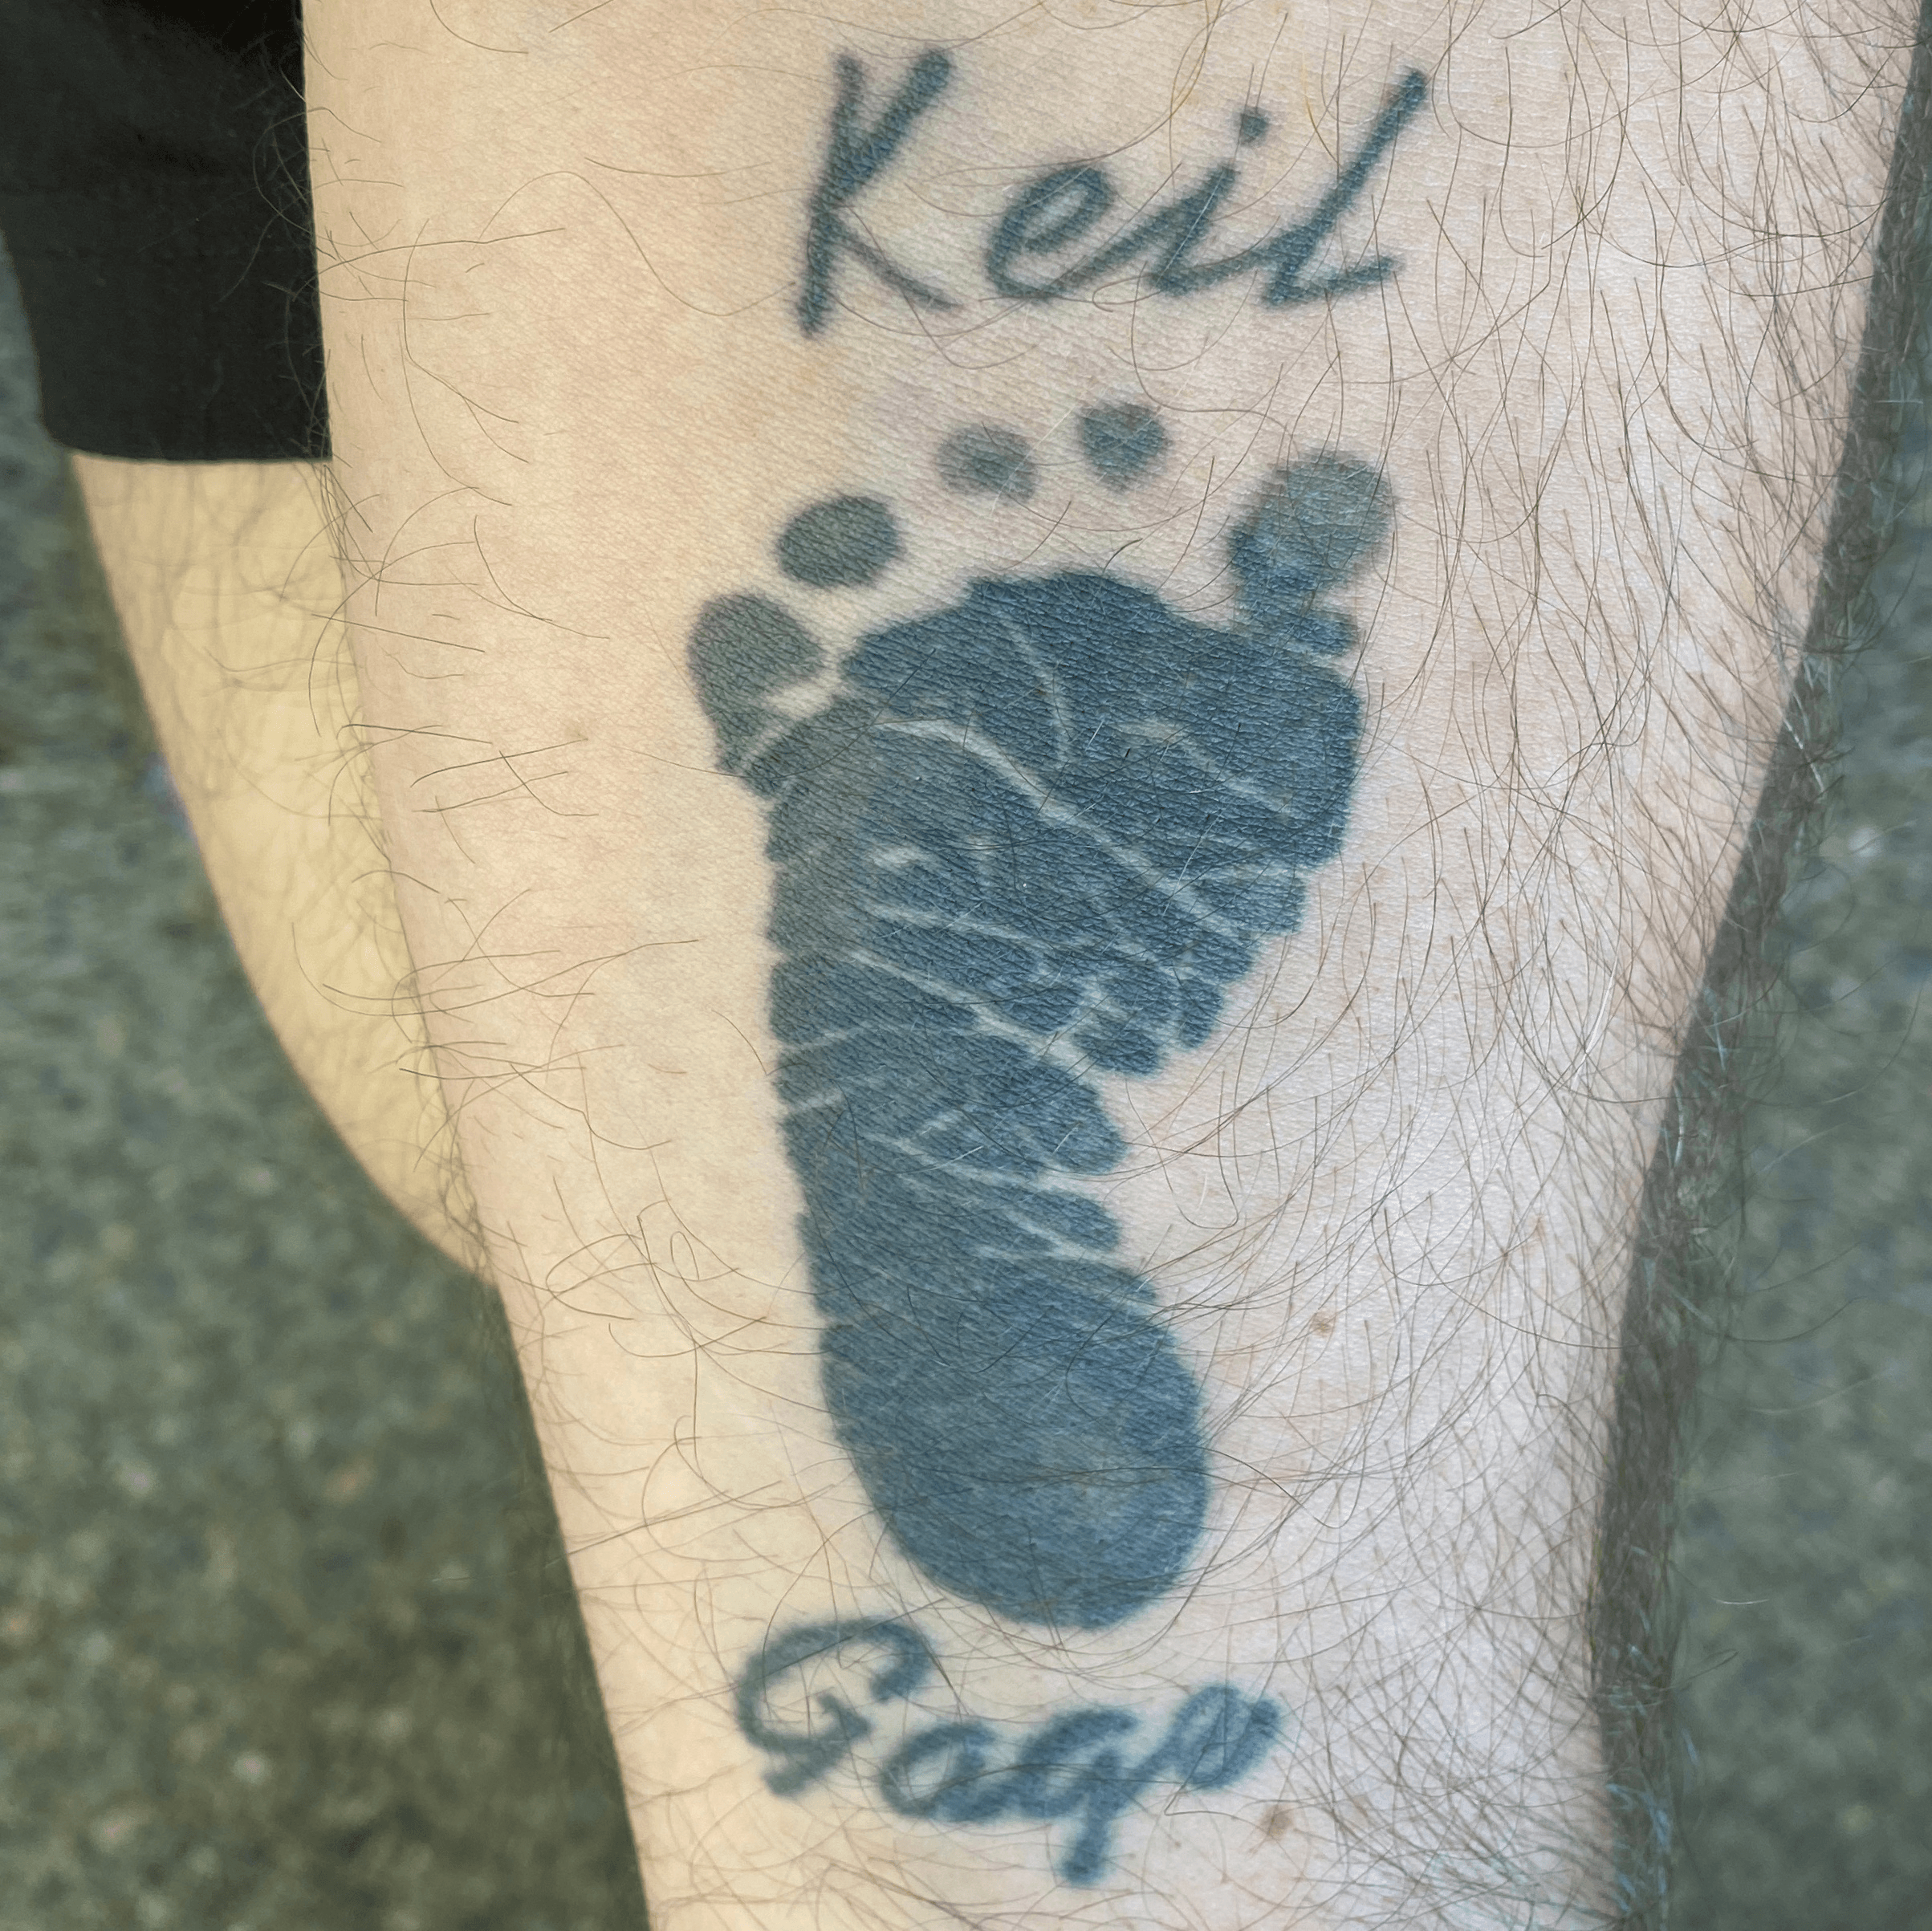 19 Adorable Baby Footprint Tattoos On Wrist  Tattoo Designs   TattoosBagcom